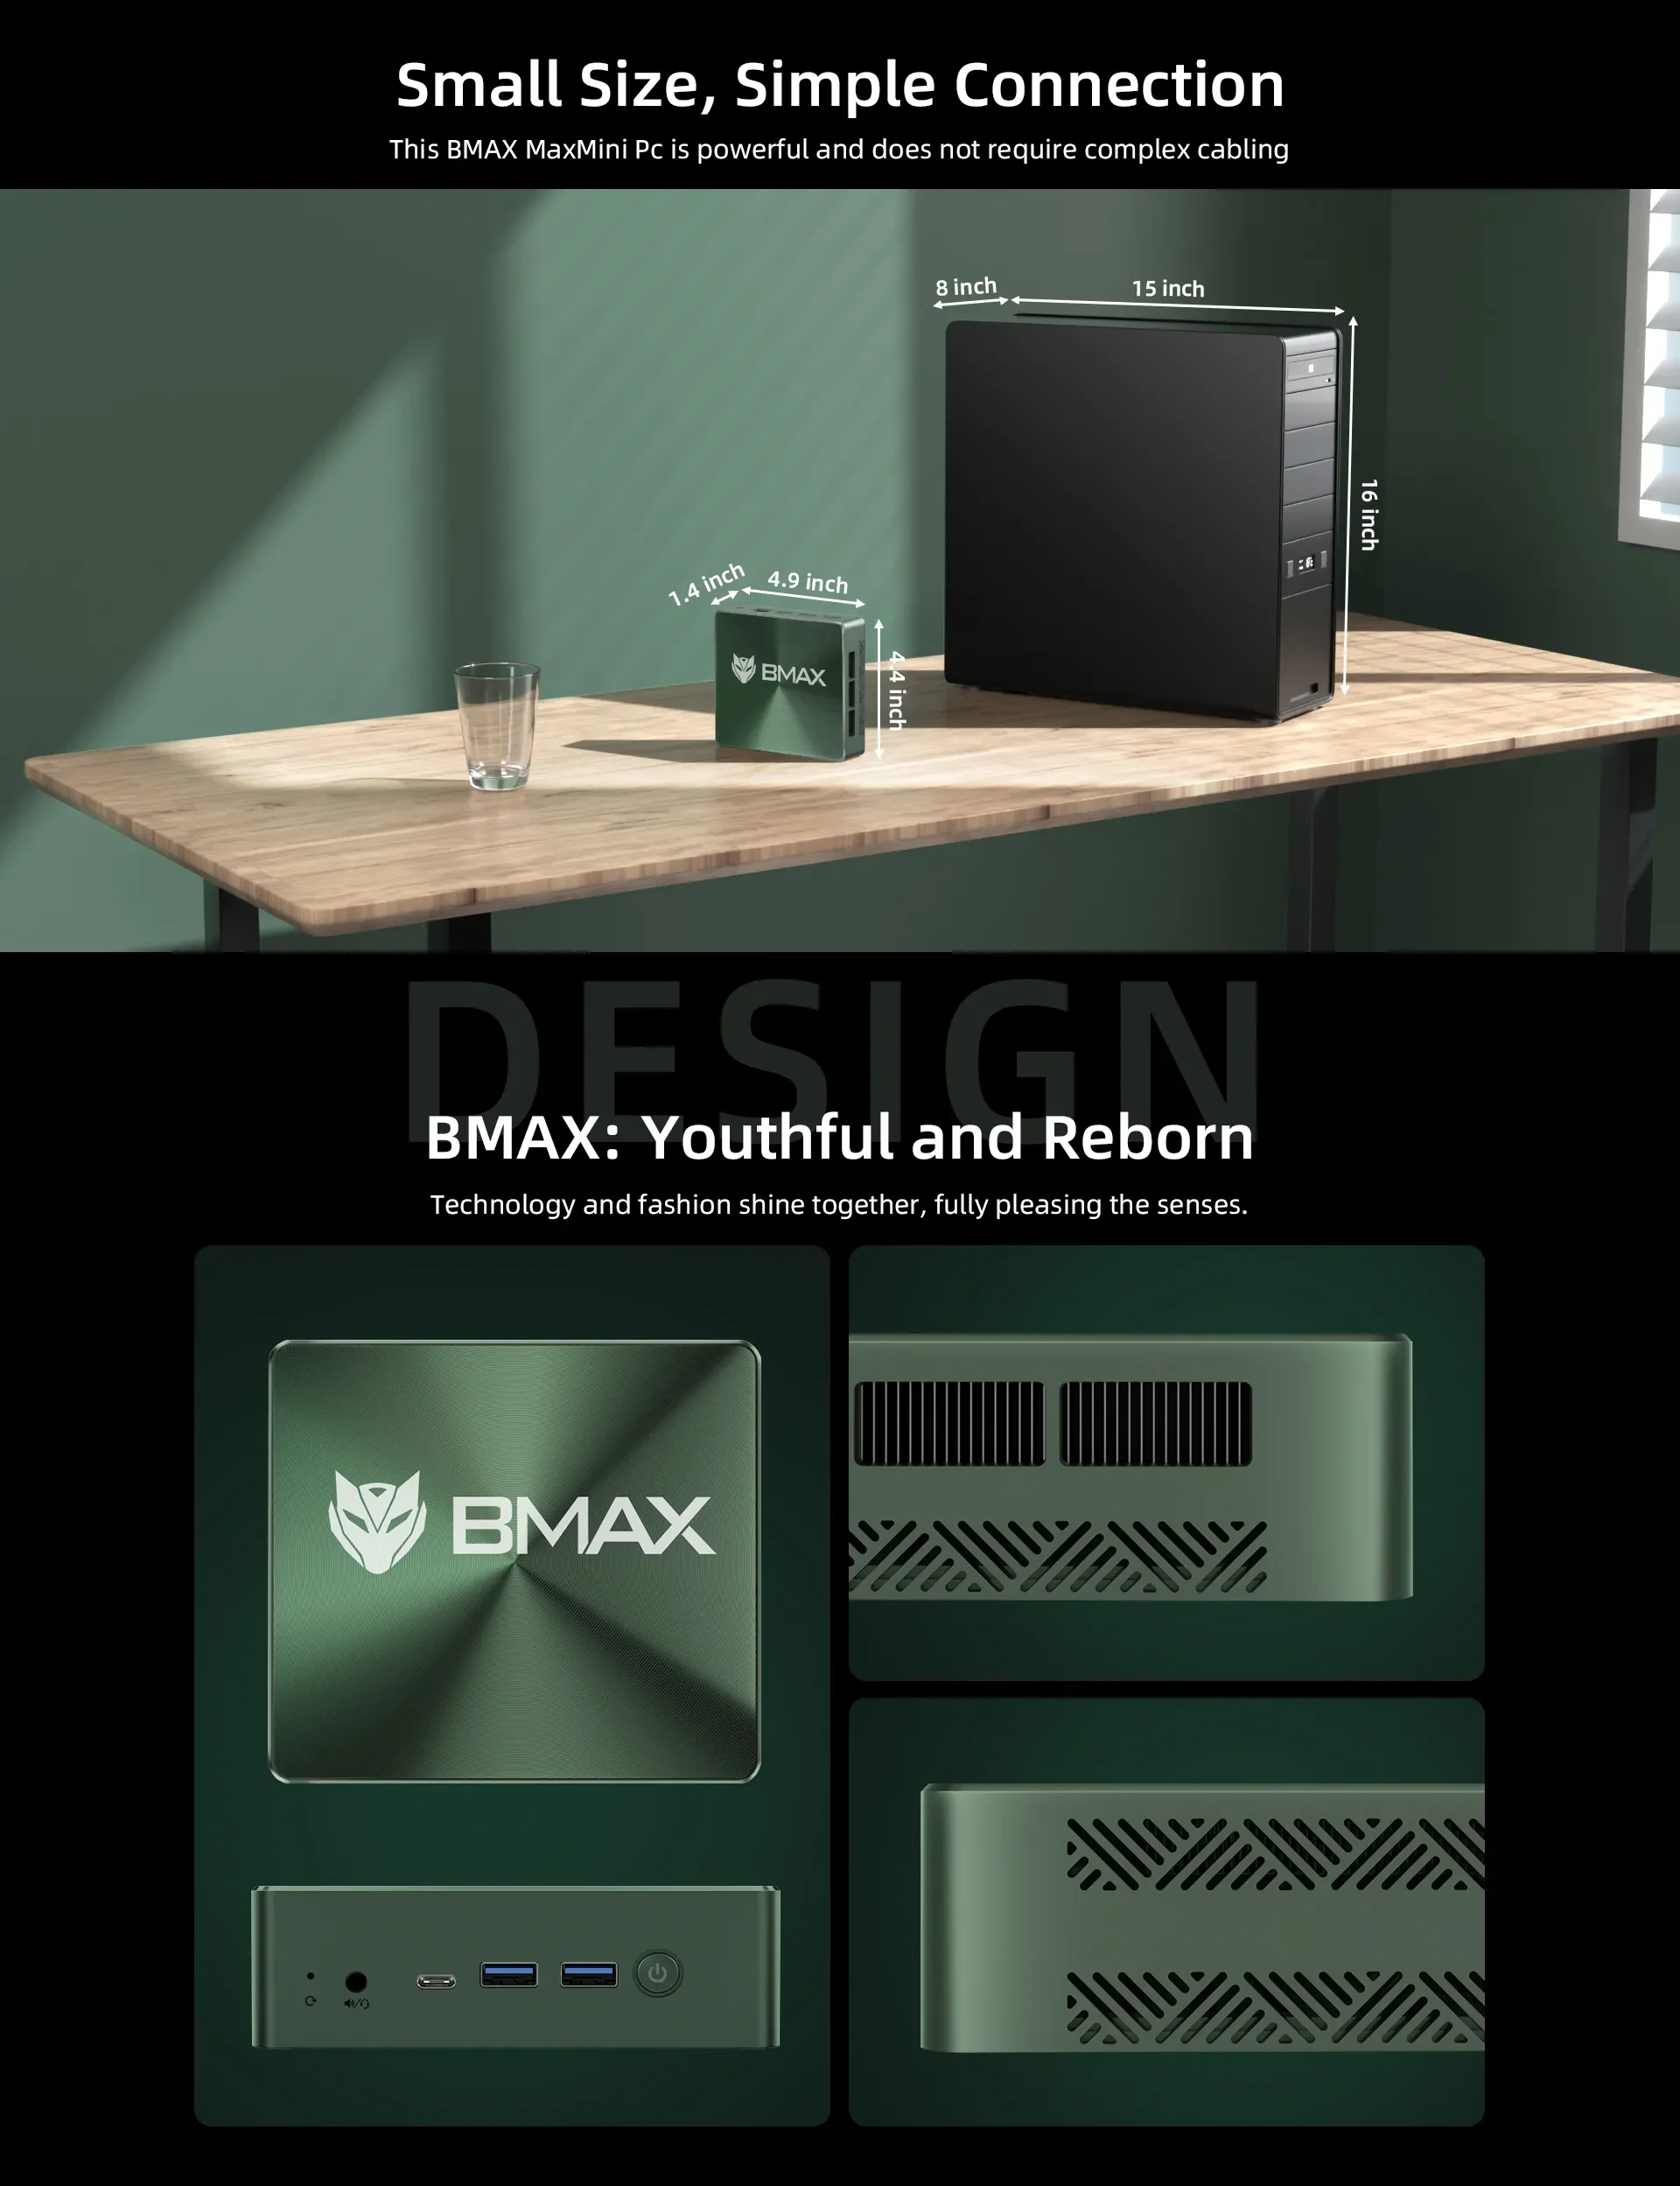 BMAX Mini PC B6POWER Intel Core I7-1060NG7 Windows 11 16GB RAM 1TB NVME SSD NVME _ 2280x2 HDMI USB Bluetooth Ordenador Tipo-c